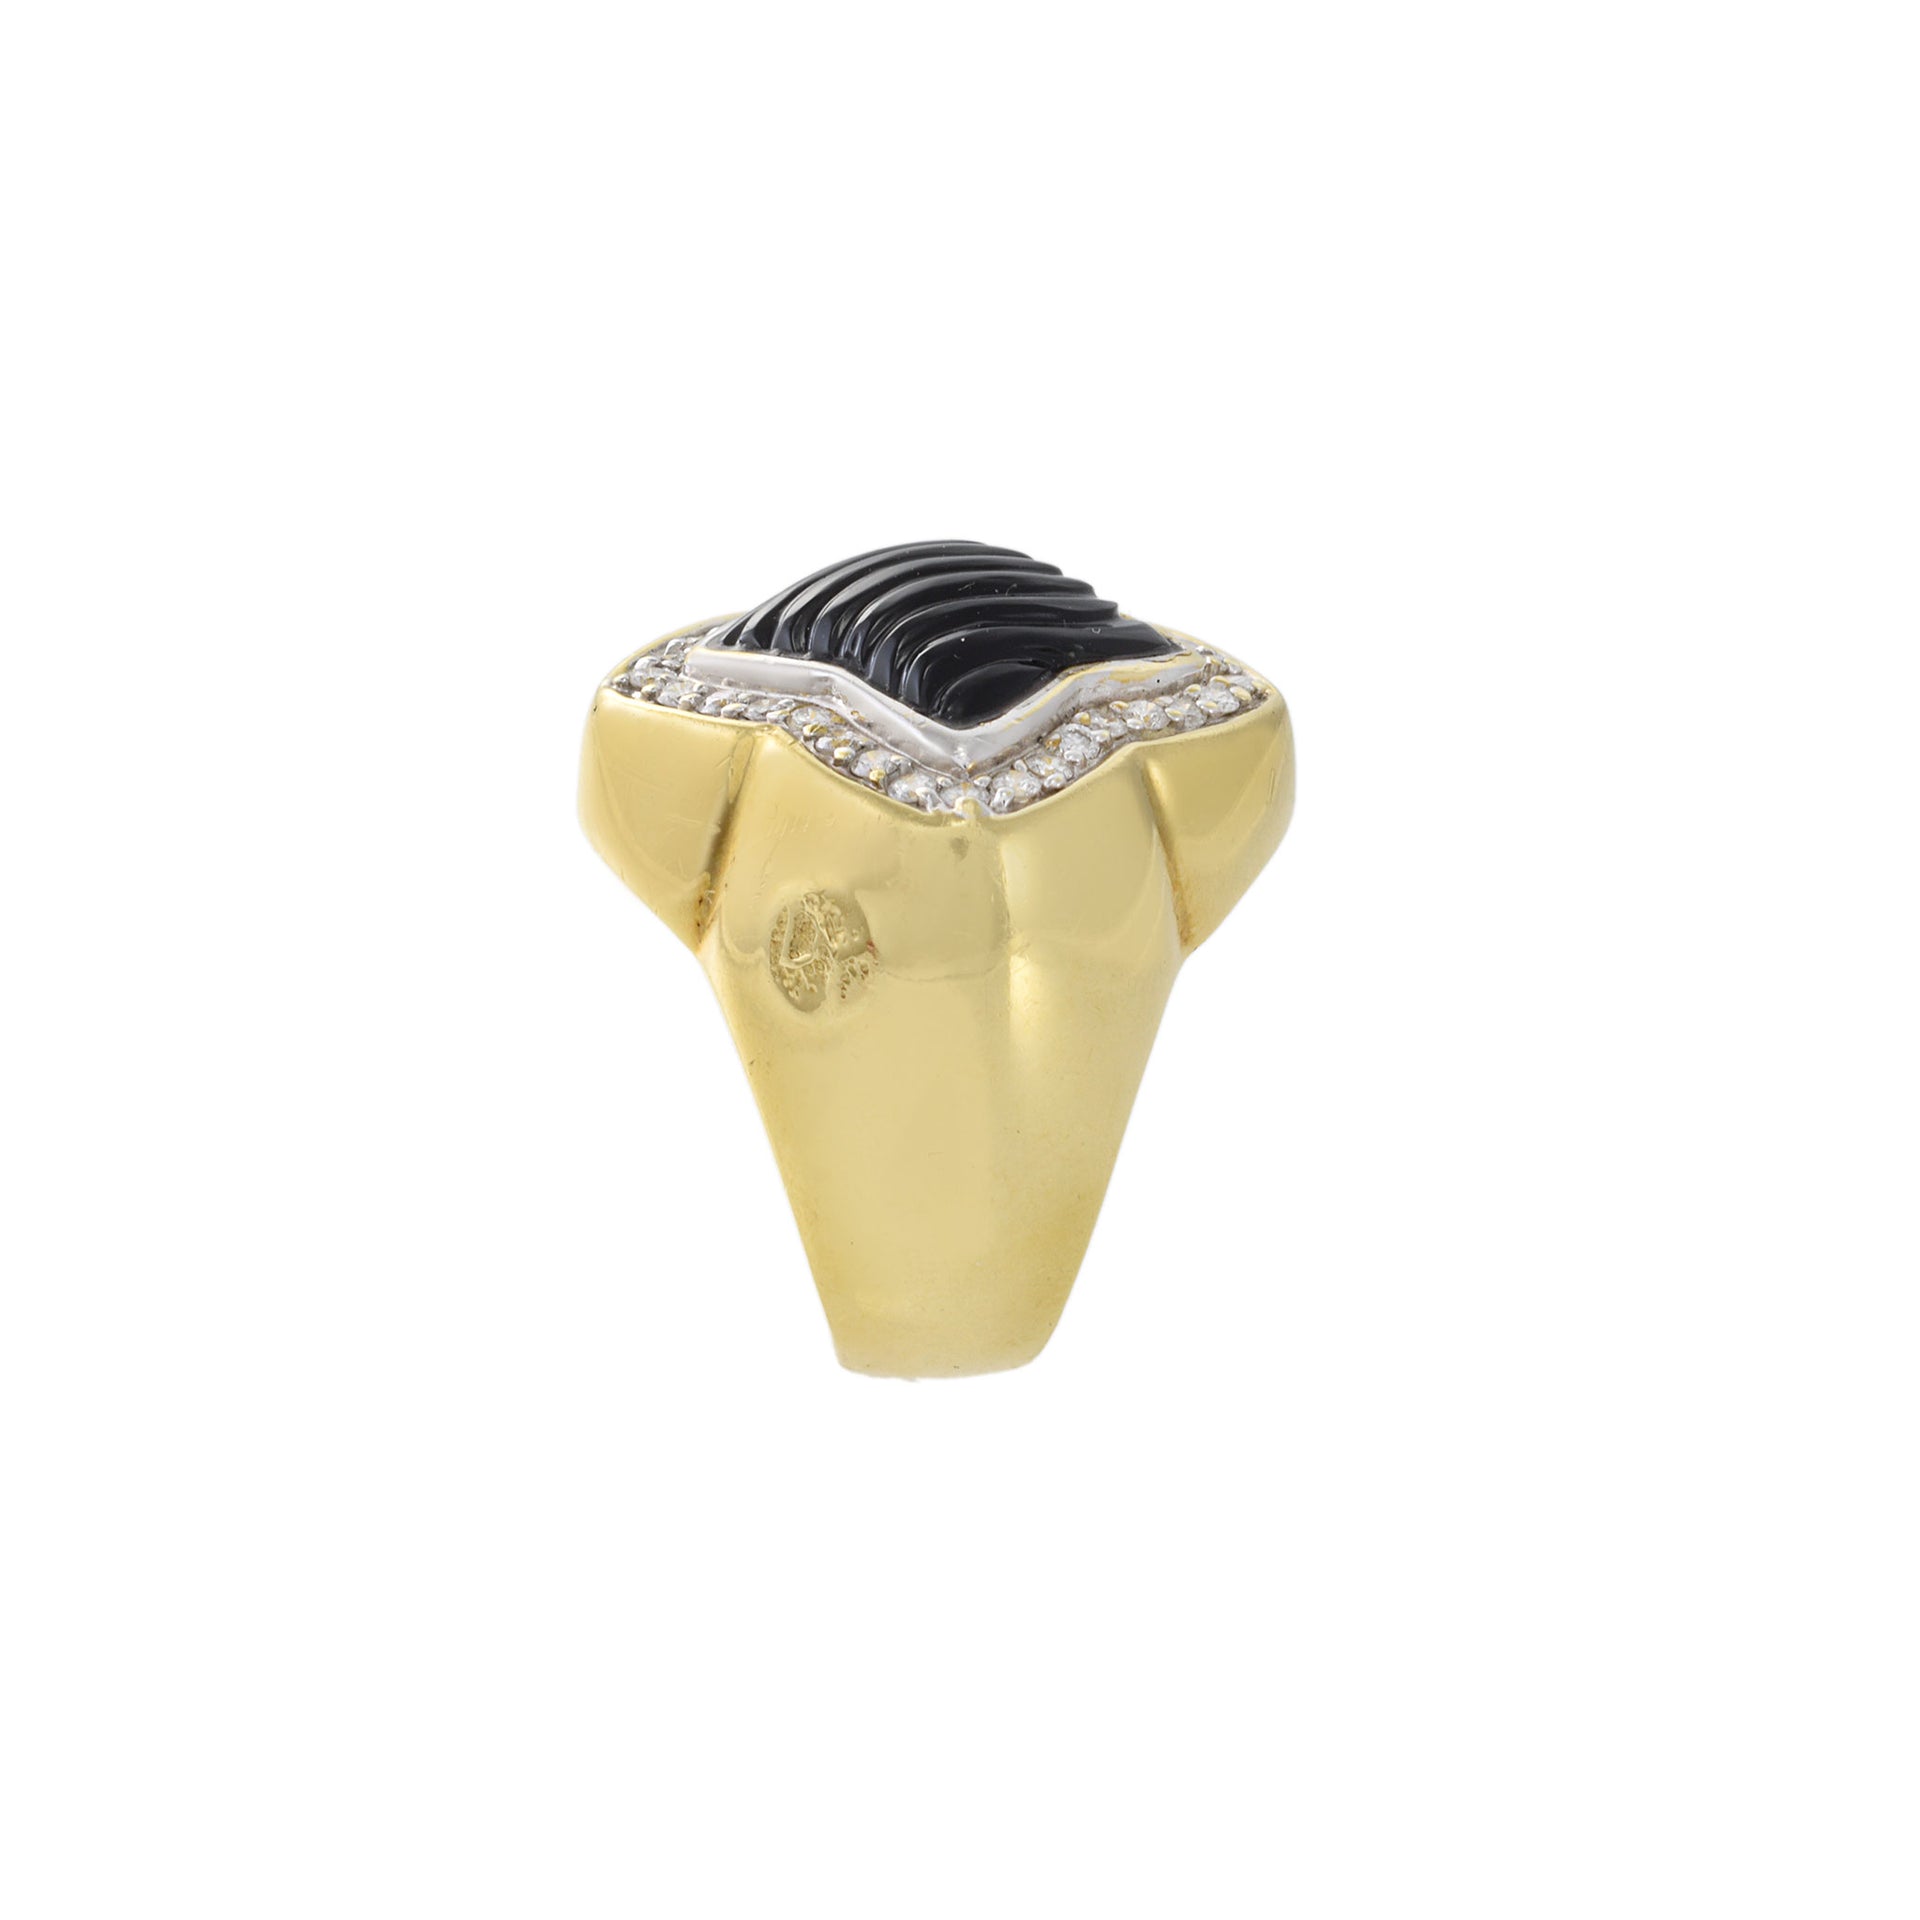 Vintage 18KT Yellow Gold David Yurman Black Onyx And Diamond Ring